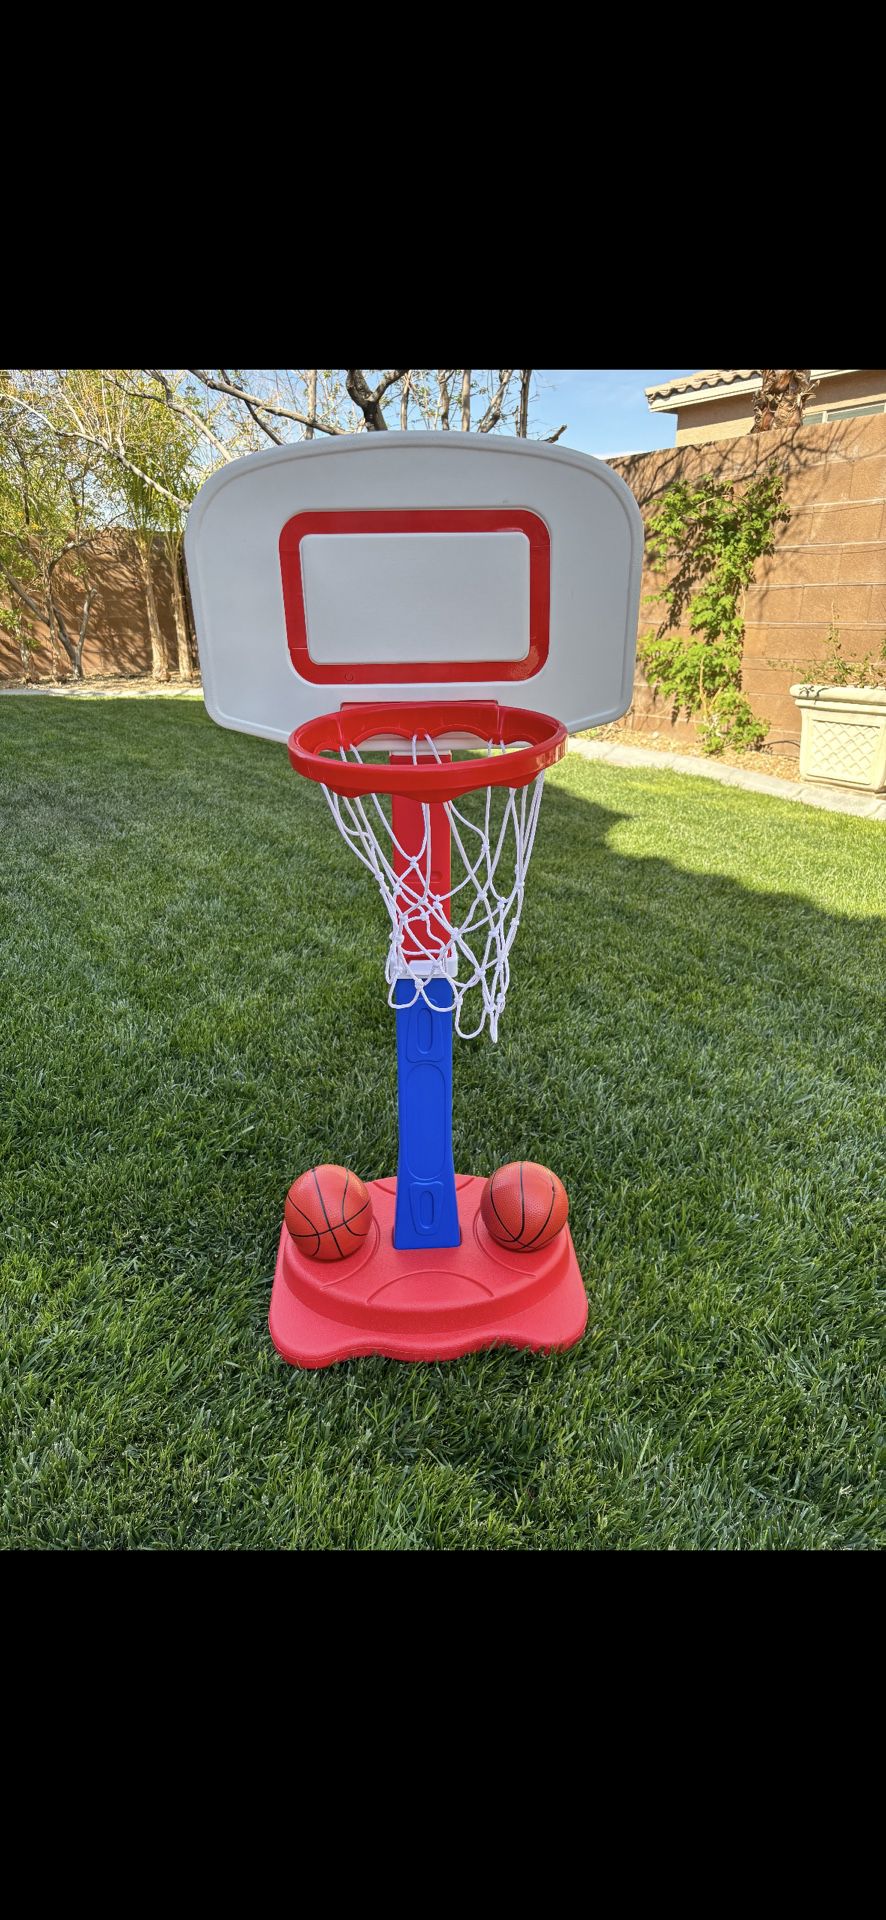 Toy Basketball Hoop